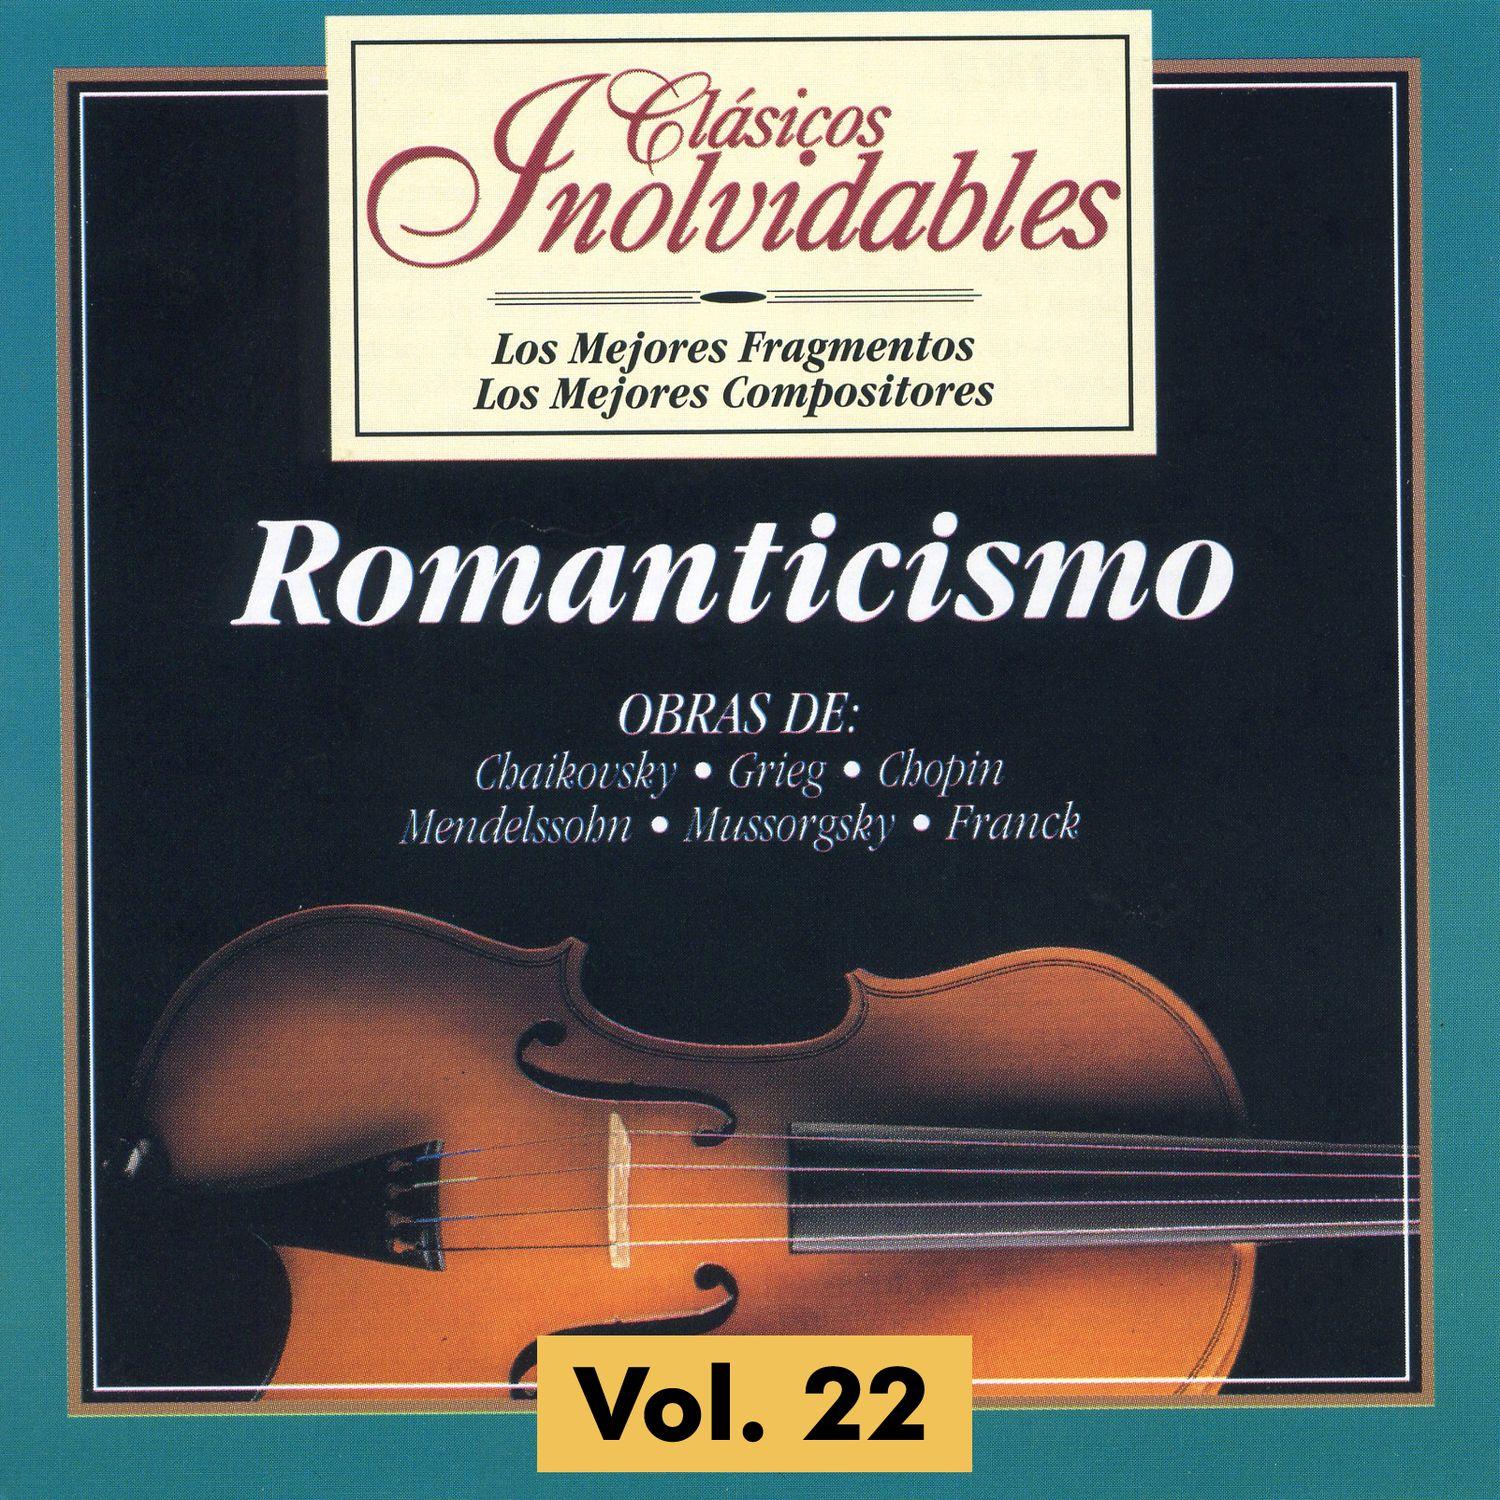 Cla sicos Inolvidables Vol. 22, Romanticismo